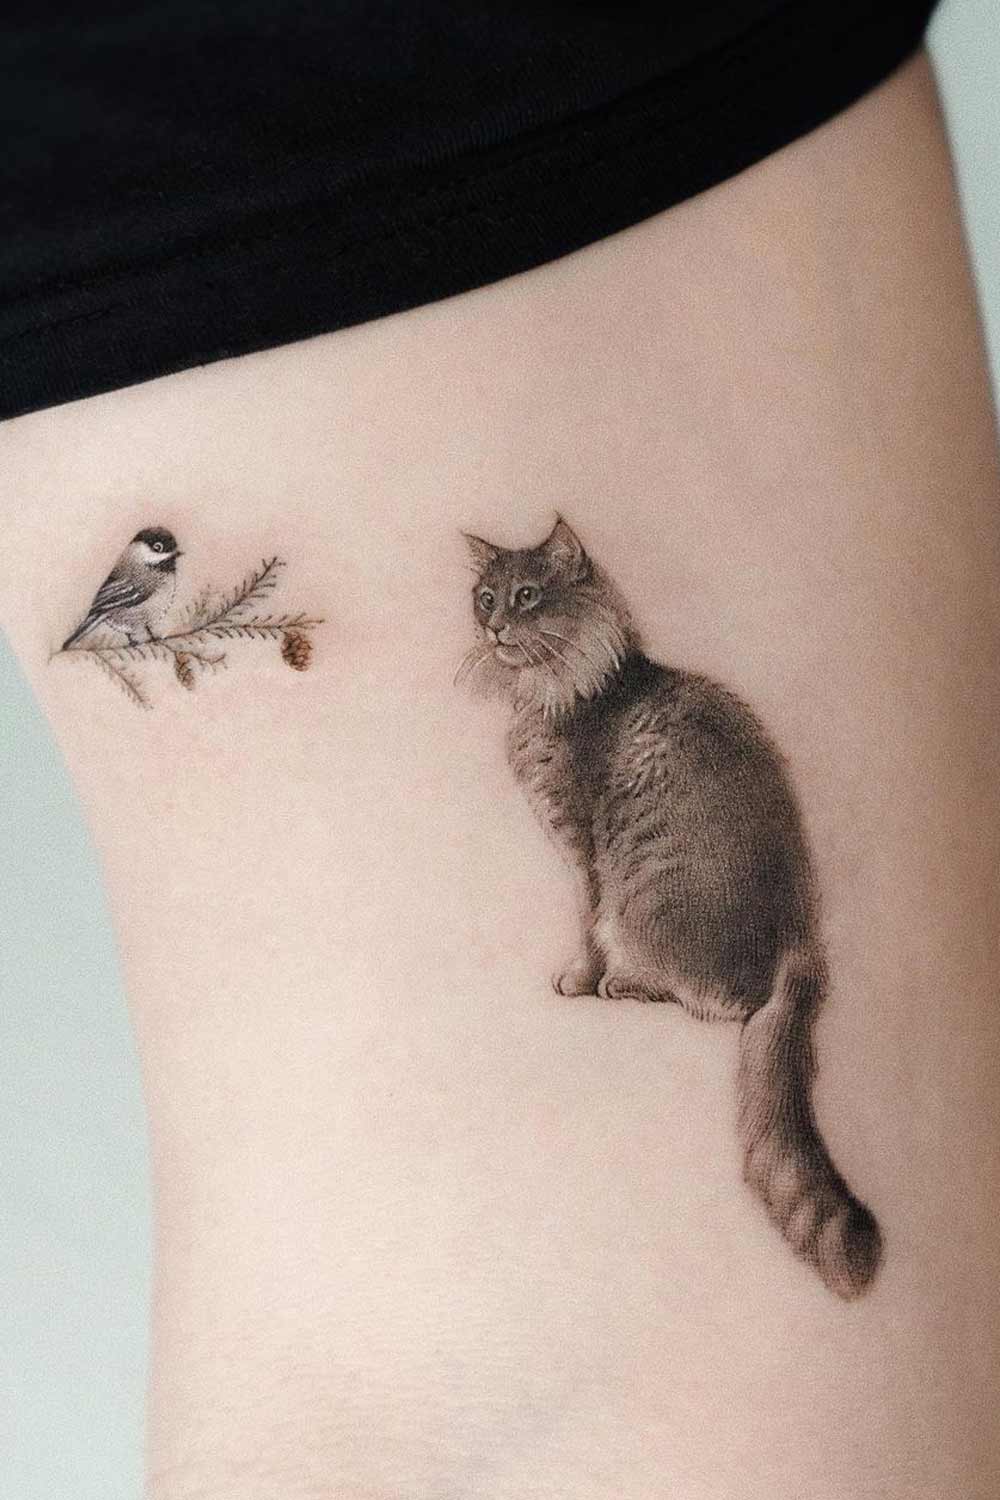 Cat with Bird Tattoo Design